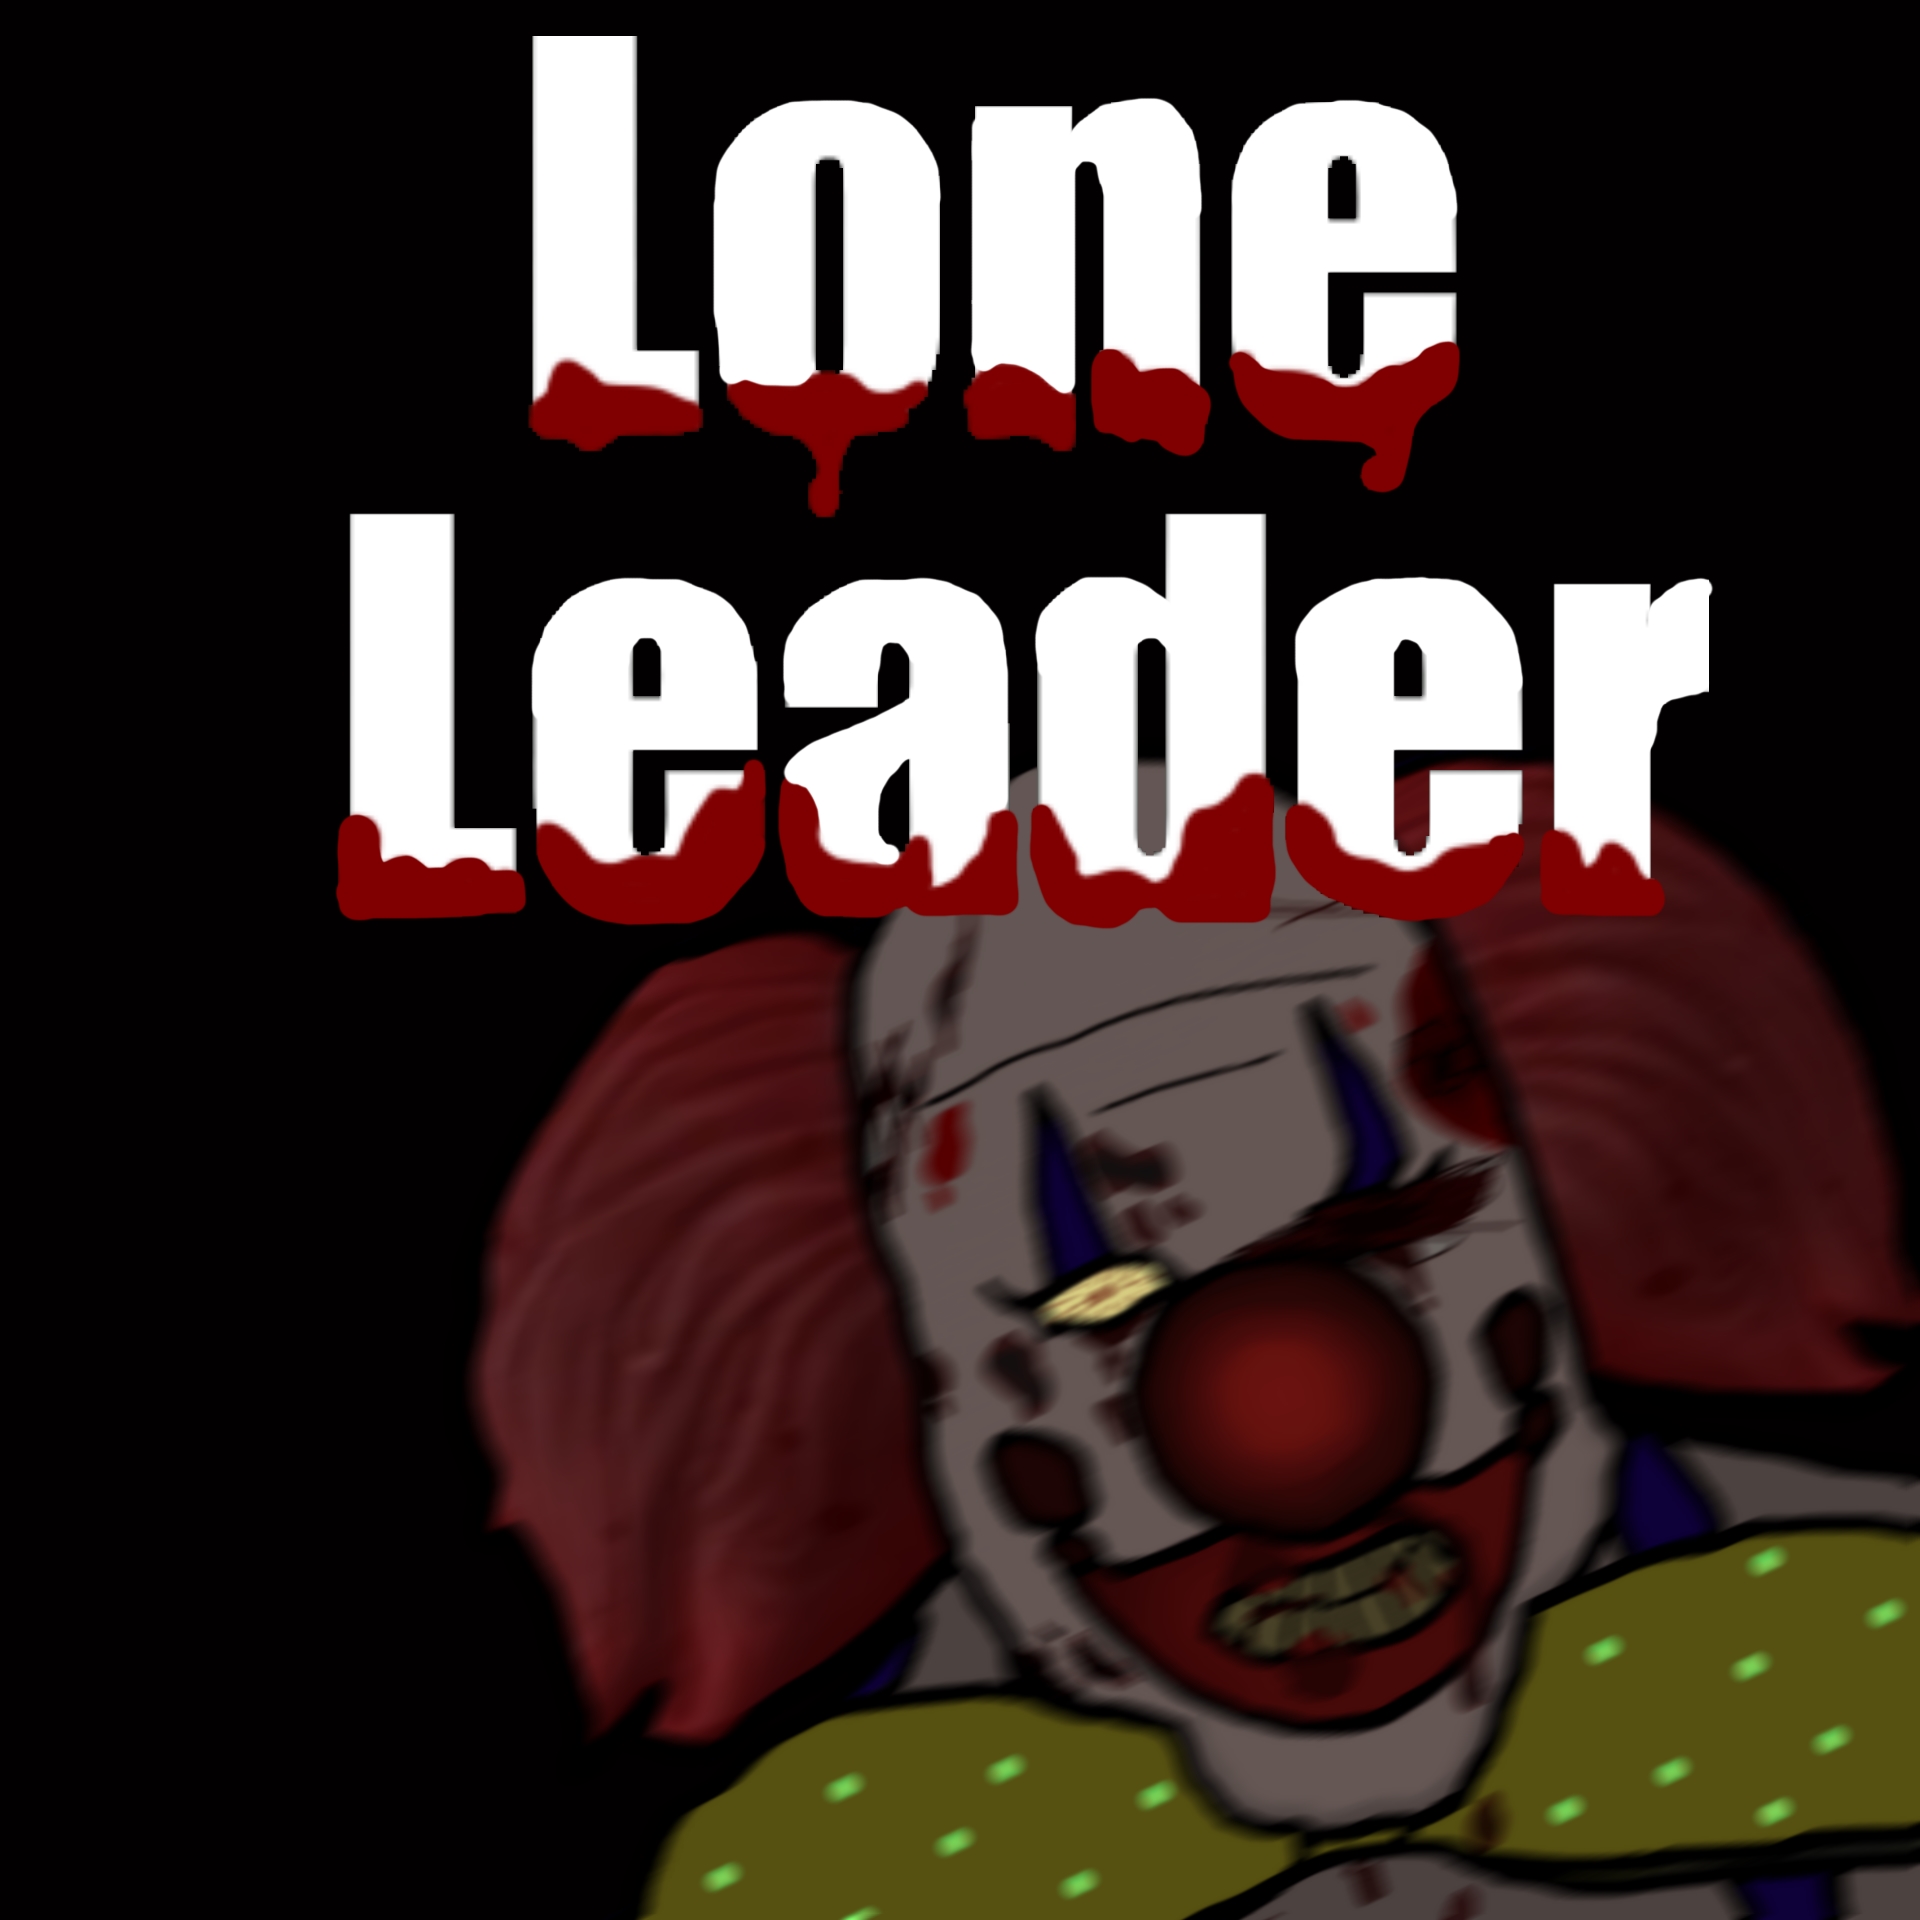 Boîte de Lone Leader